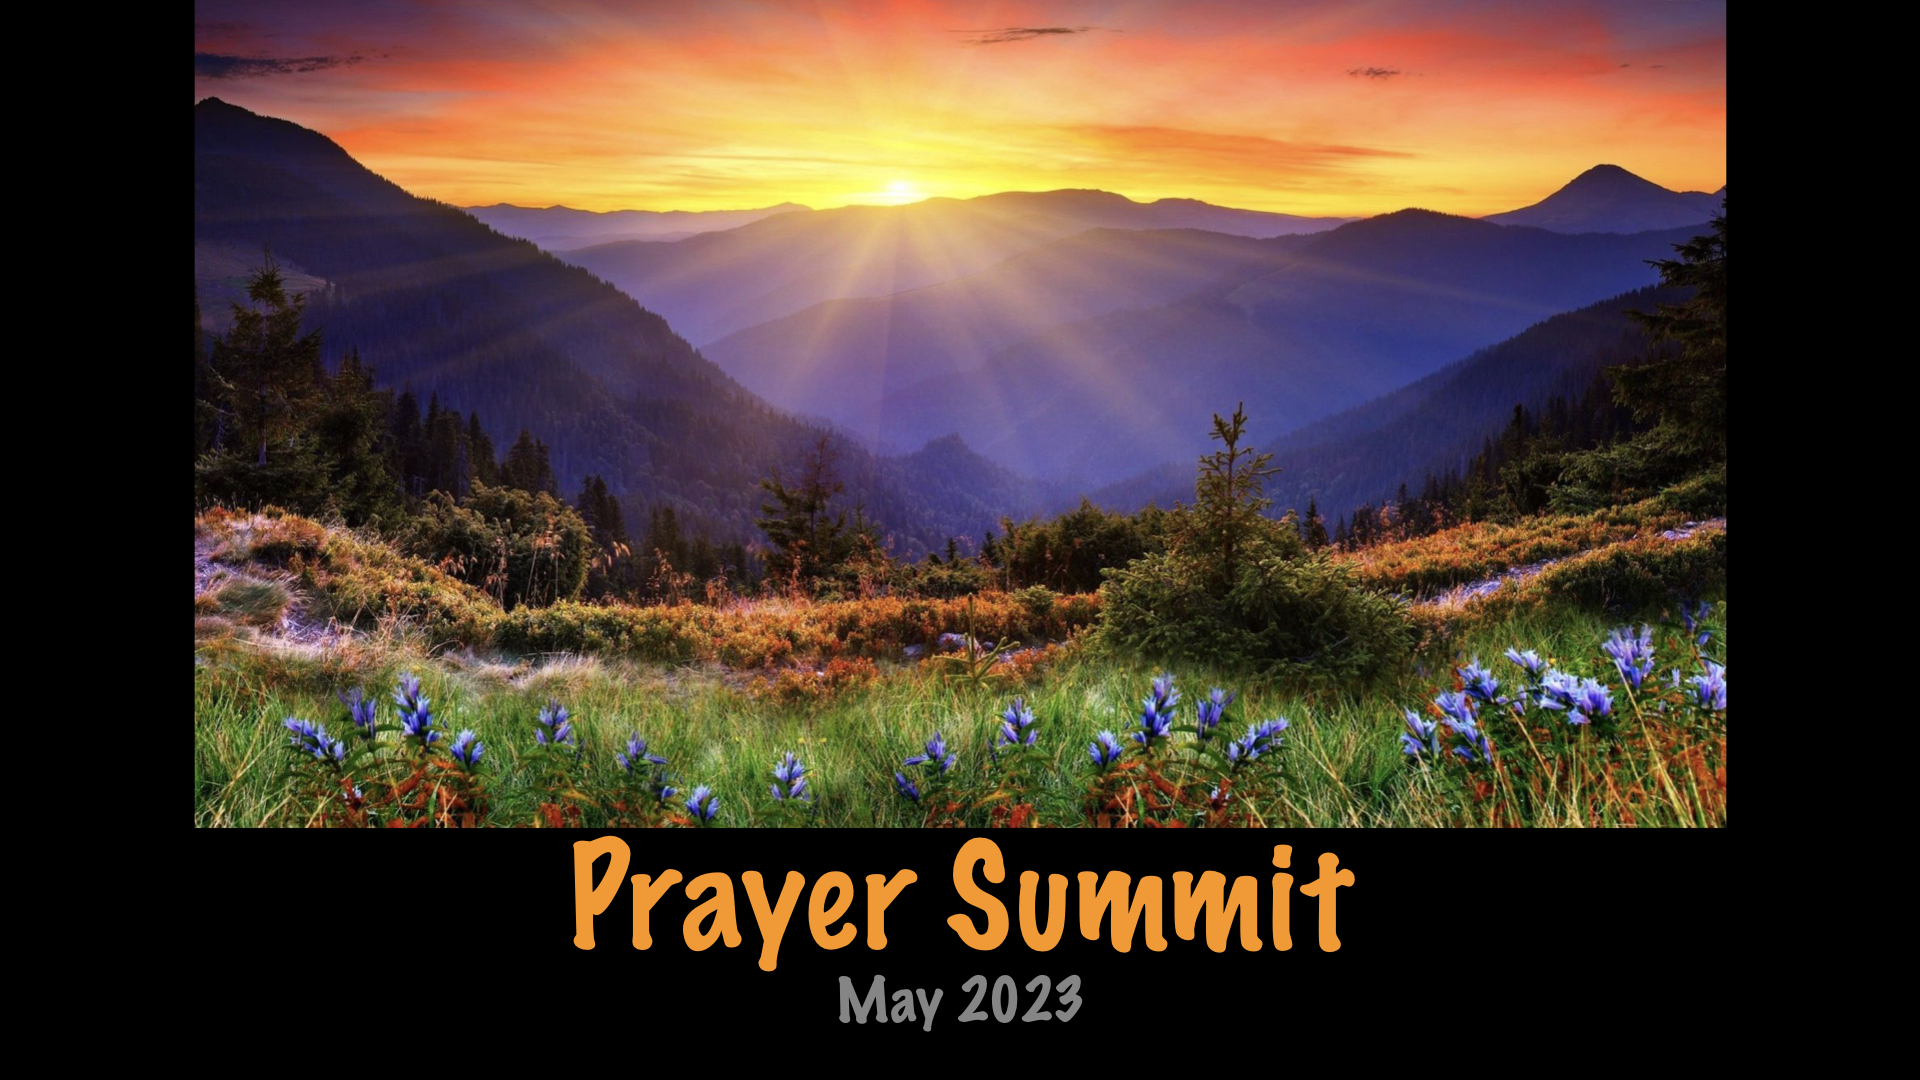 Prayer Summit by Lance Steeves